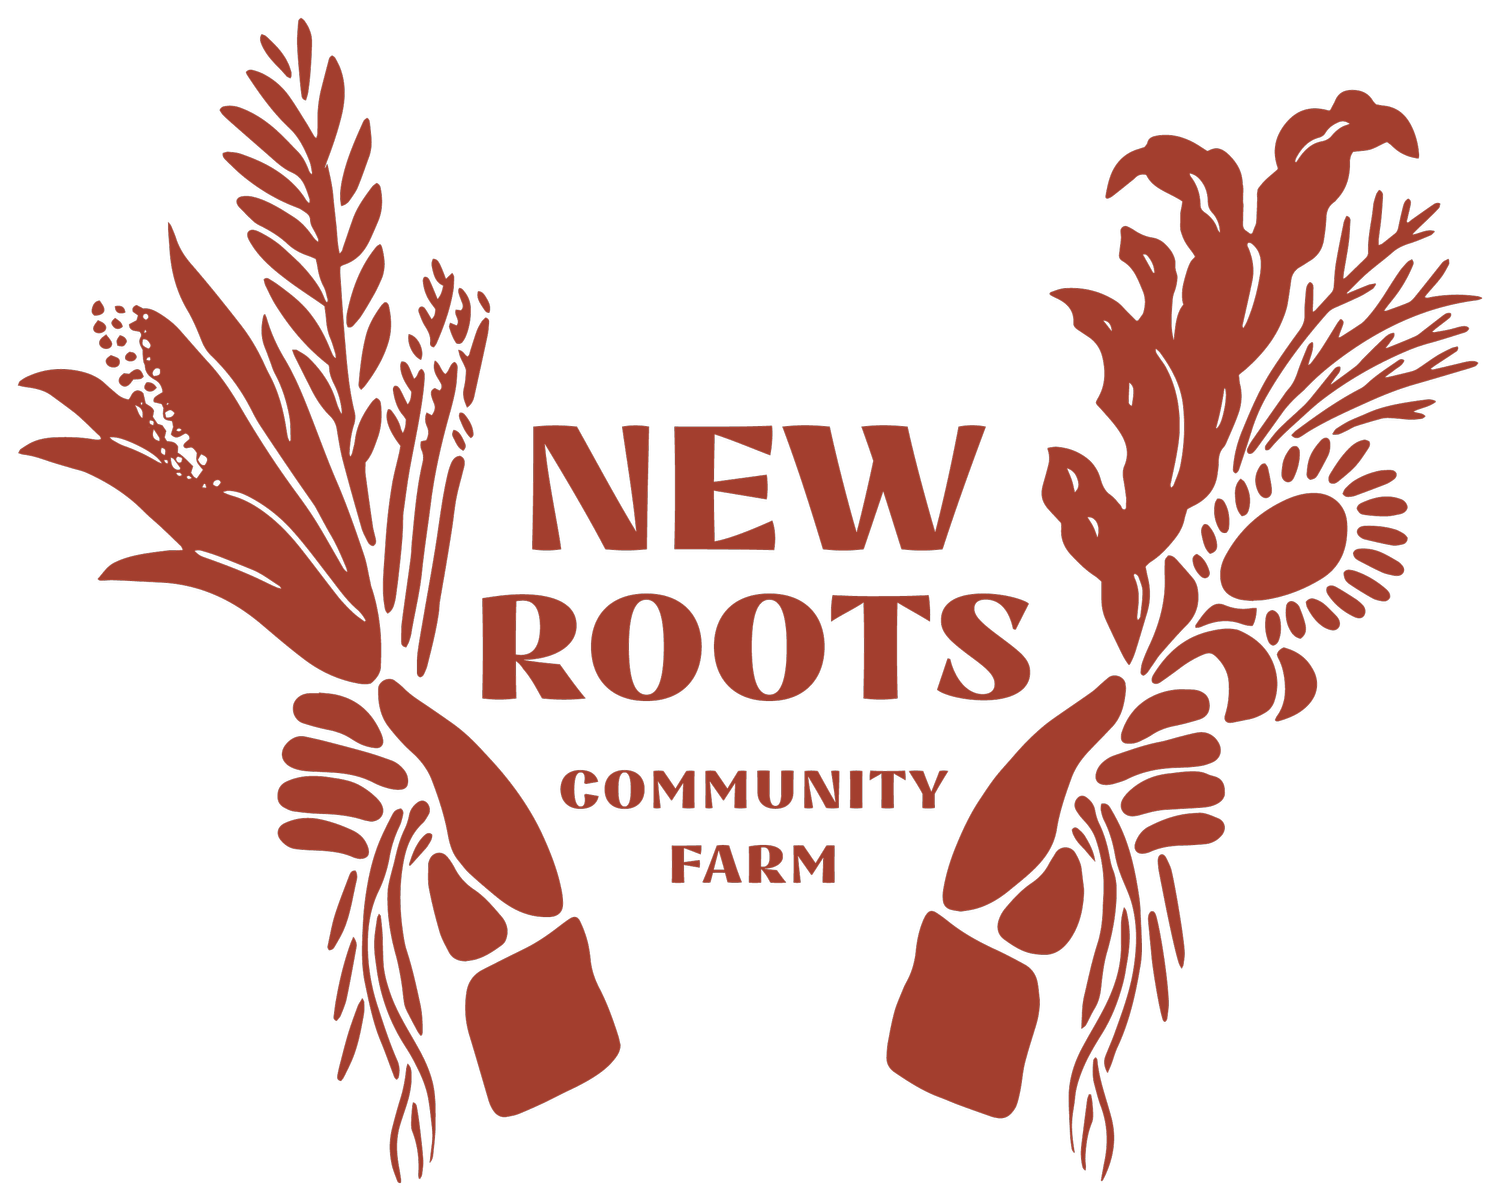 New Roots Community Farm Market - Fayetteville, WV